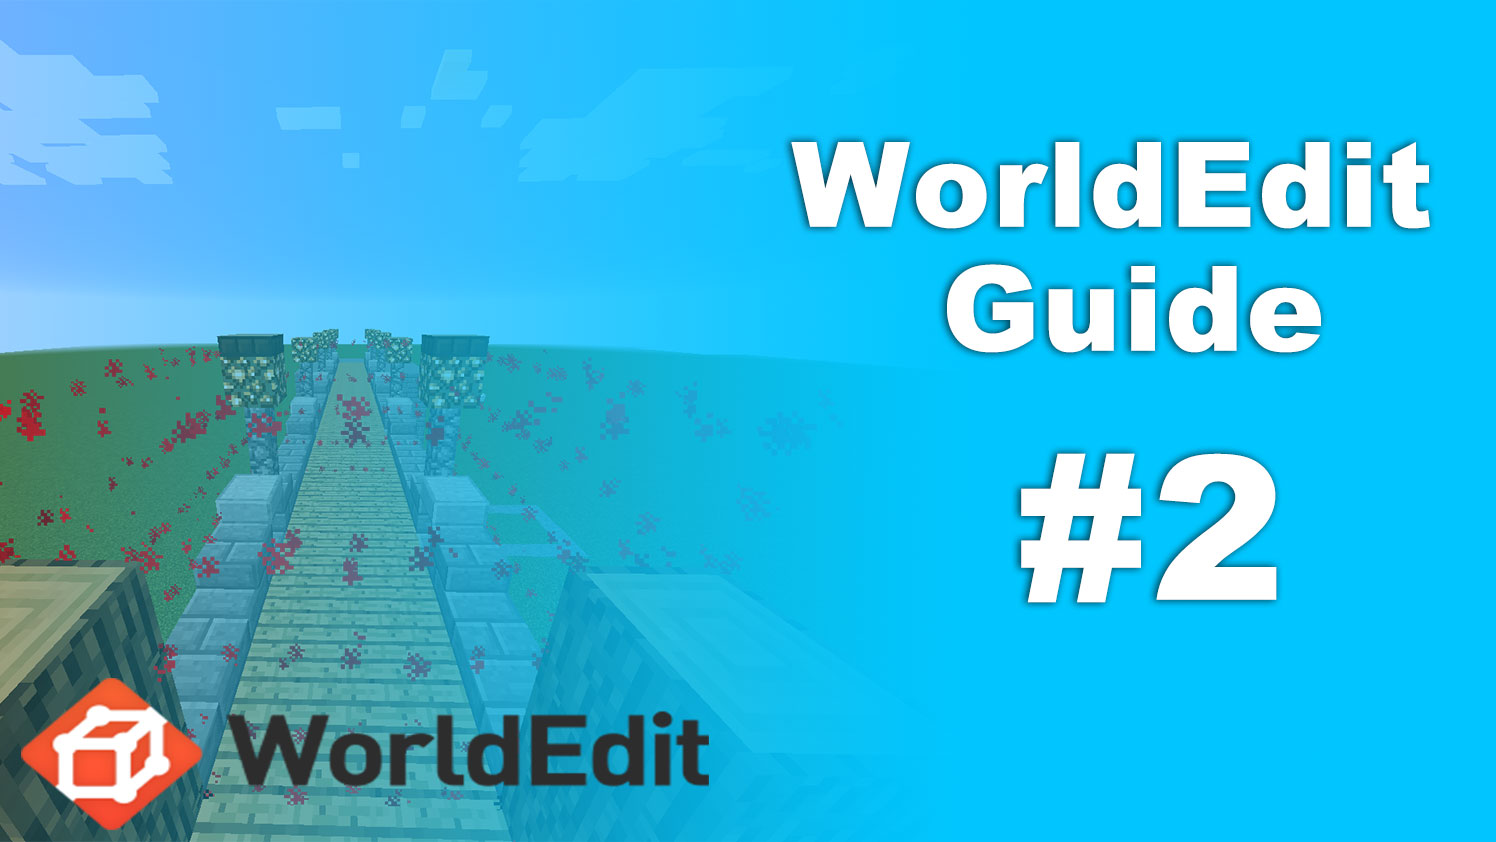 Worldedit Guide 3 クリップボード コピーと貼り付けの基本とその他 脱 初心者を目指すマインクラフト